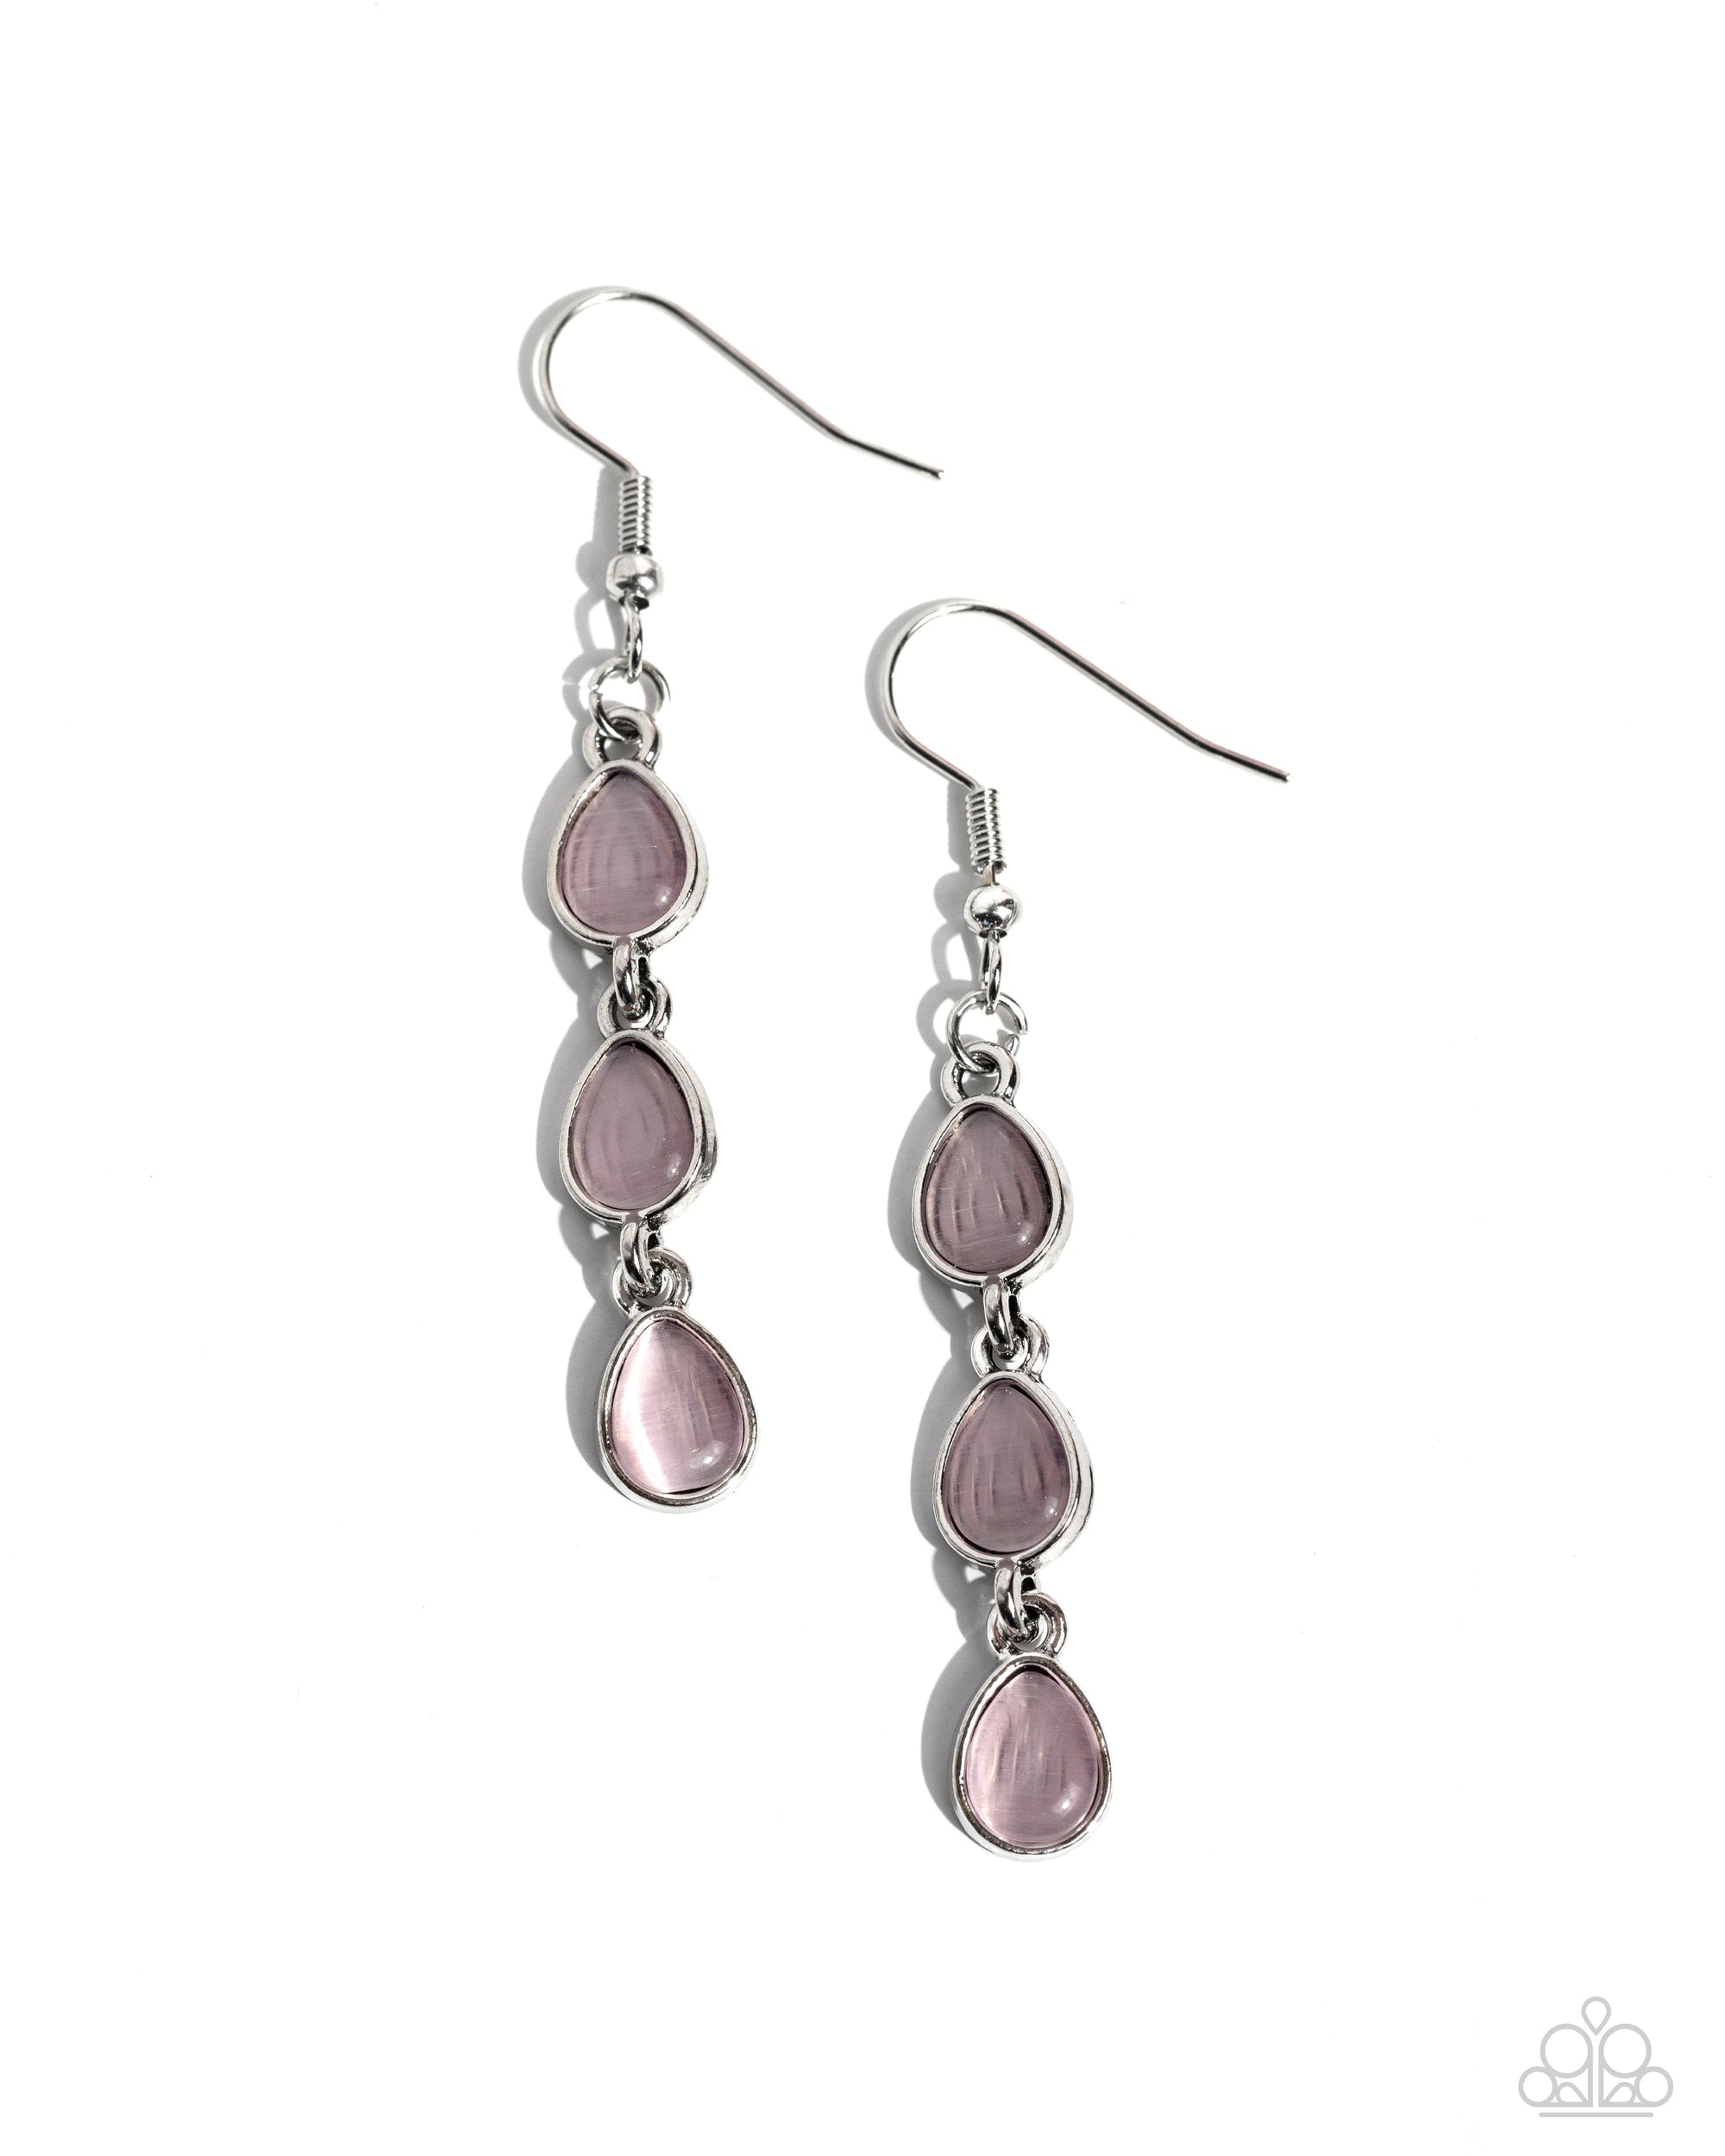 Summer Rain Pink Cat's Eye Stone Earrings - Paparazzi Accessories- lightbox - CarasShop.com - $5 Jewelry by Cara Jewels